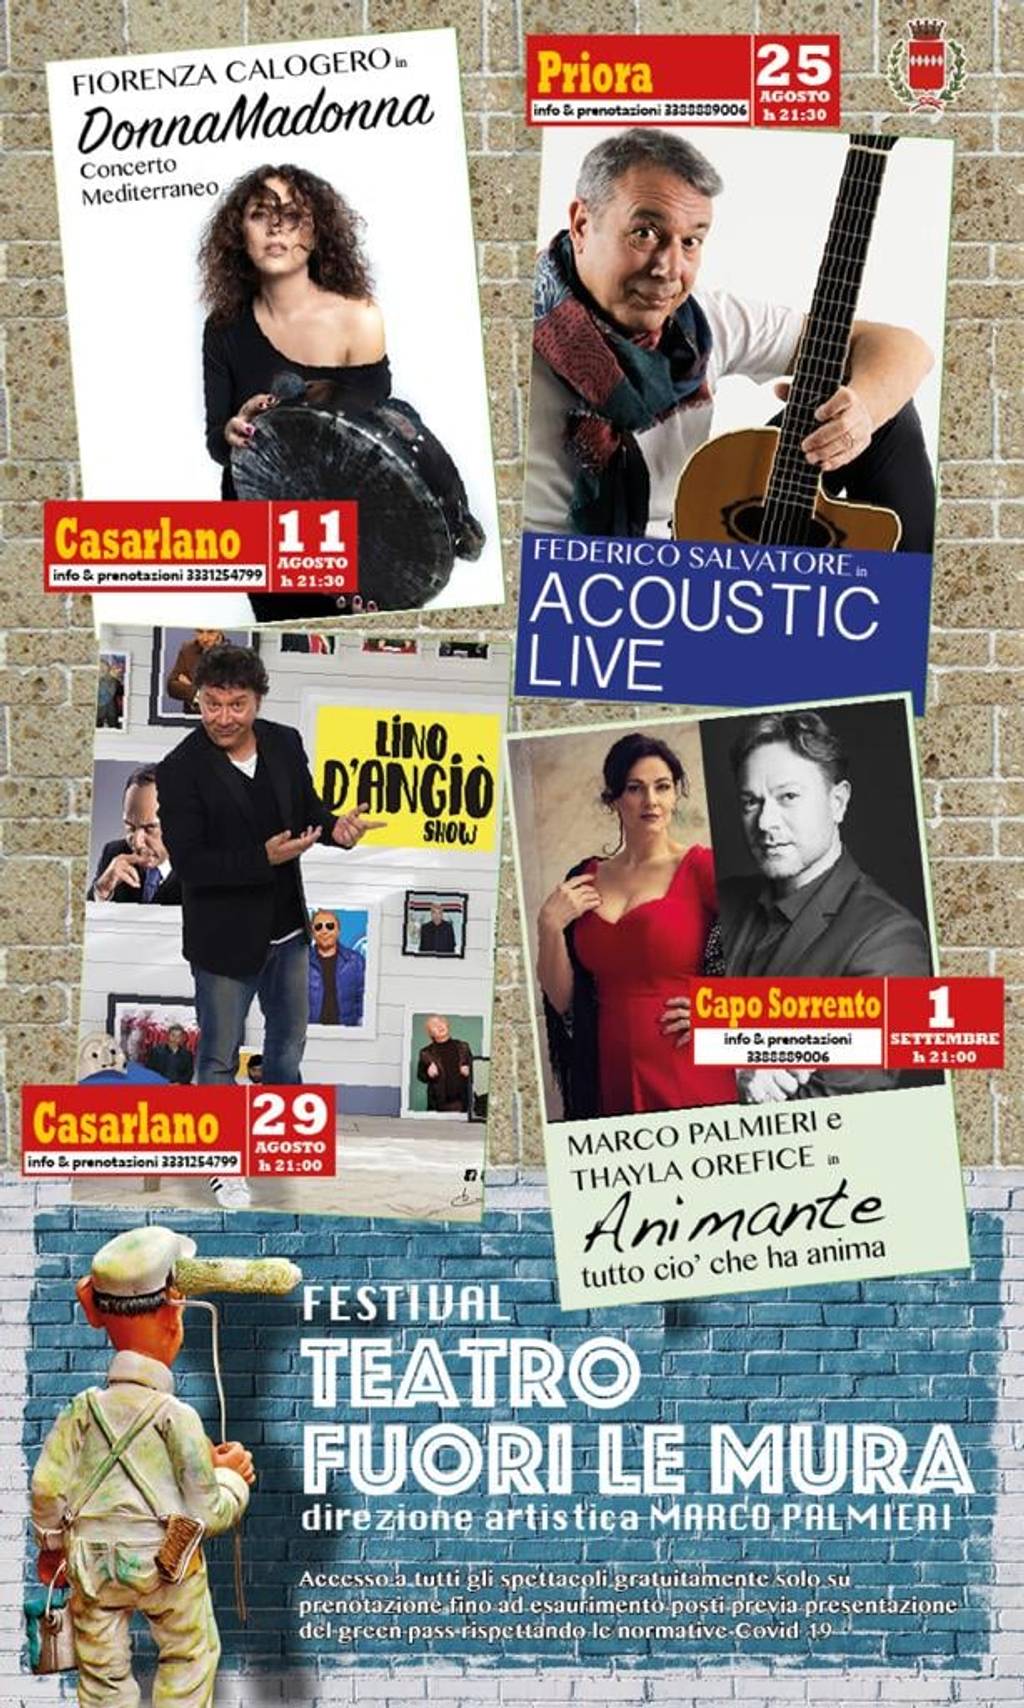 Federico Salvatore in Acoustic Live